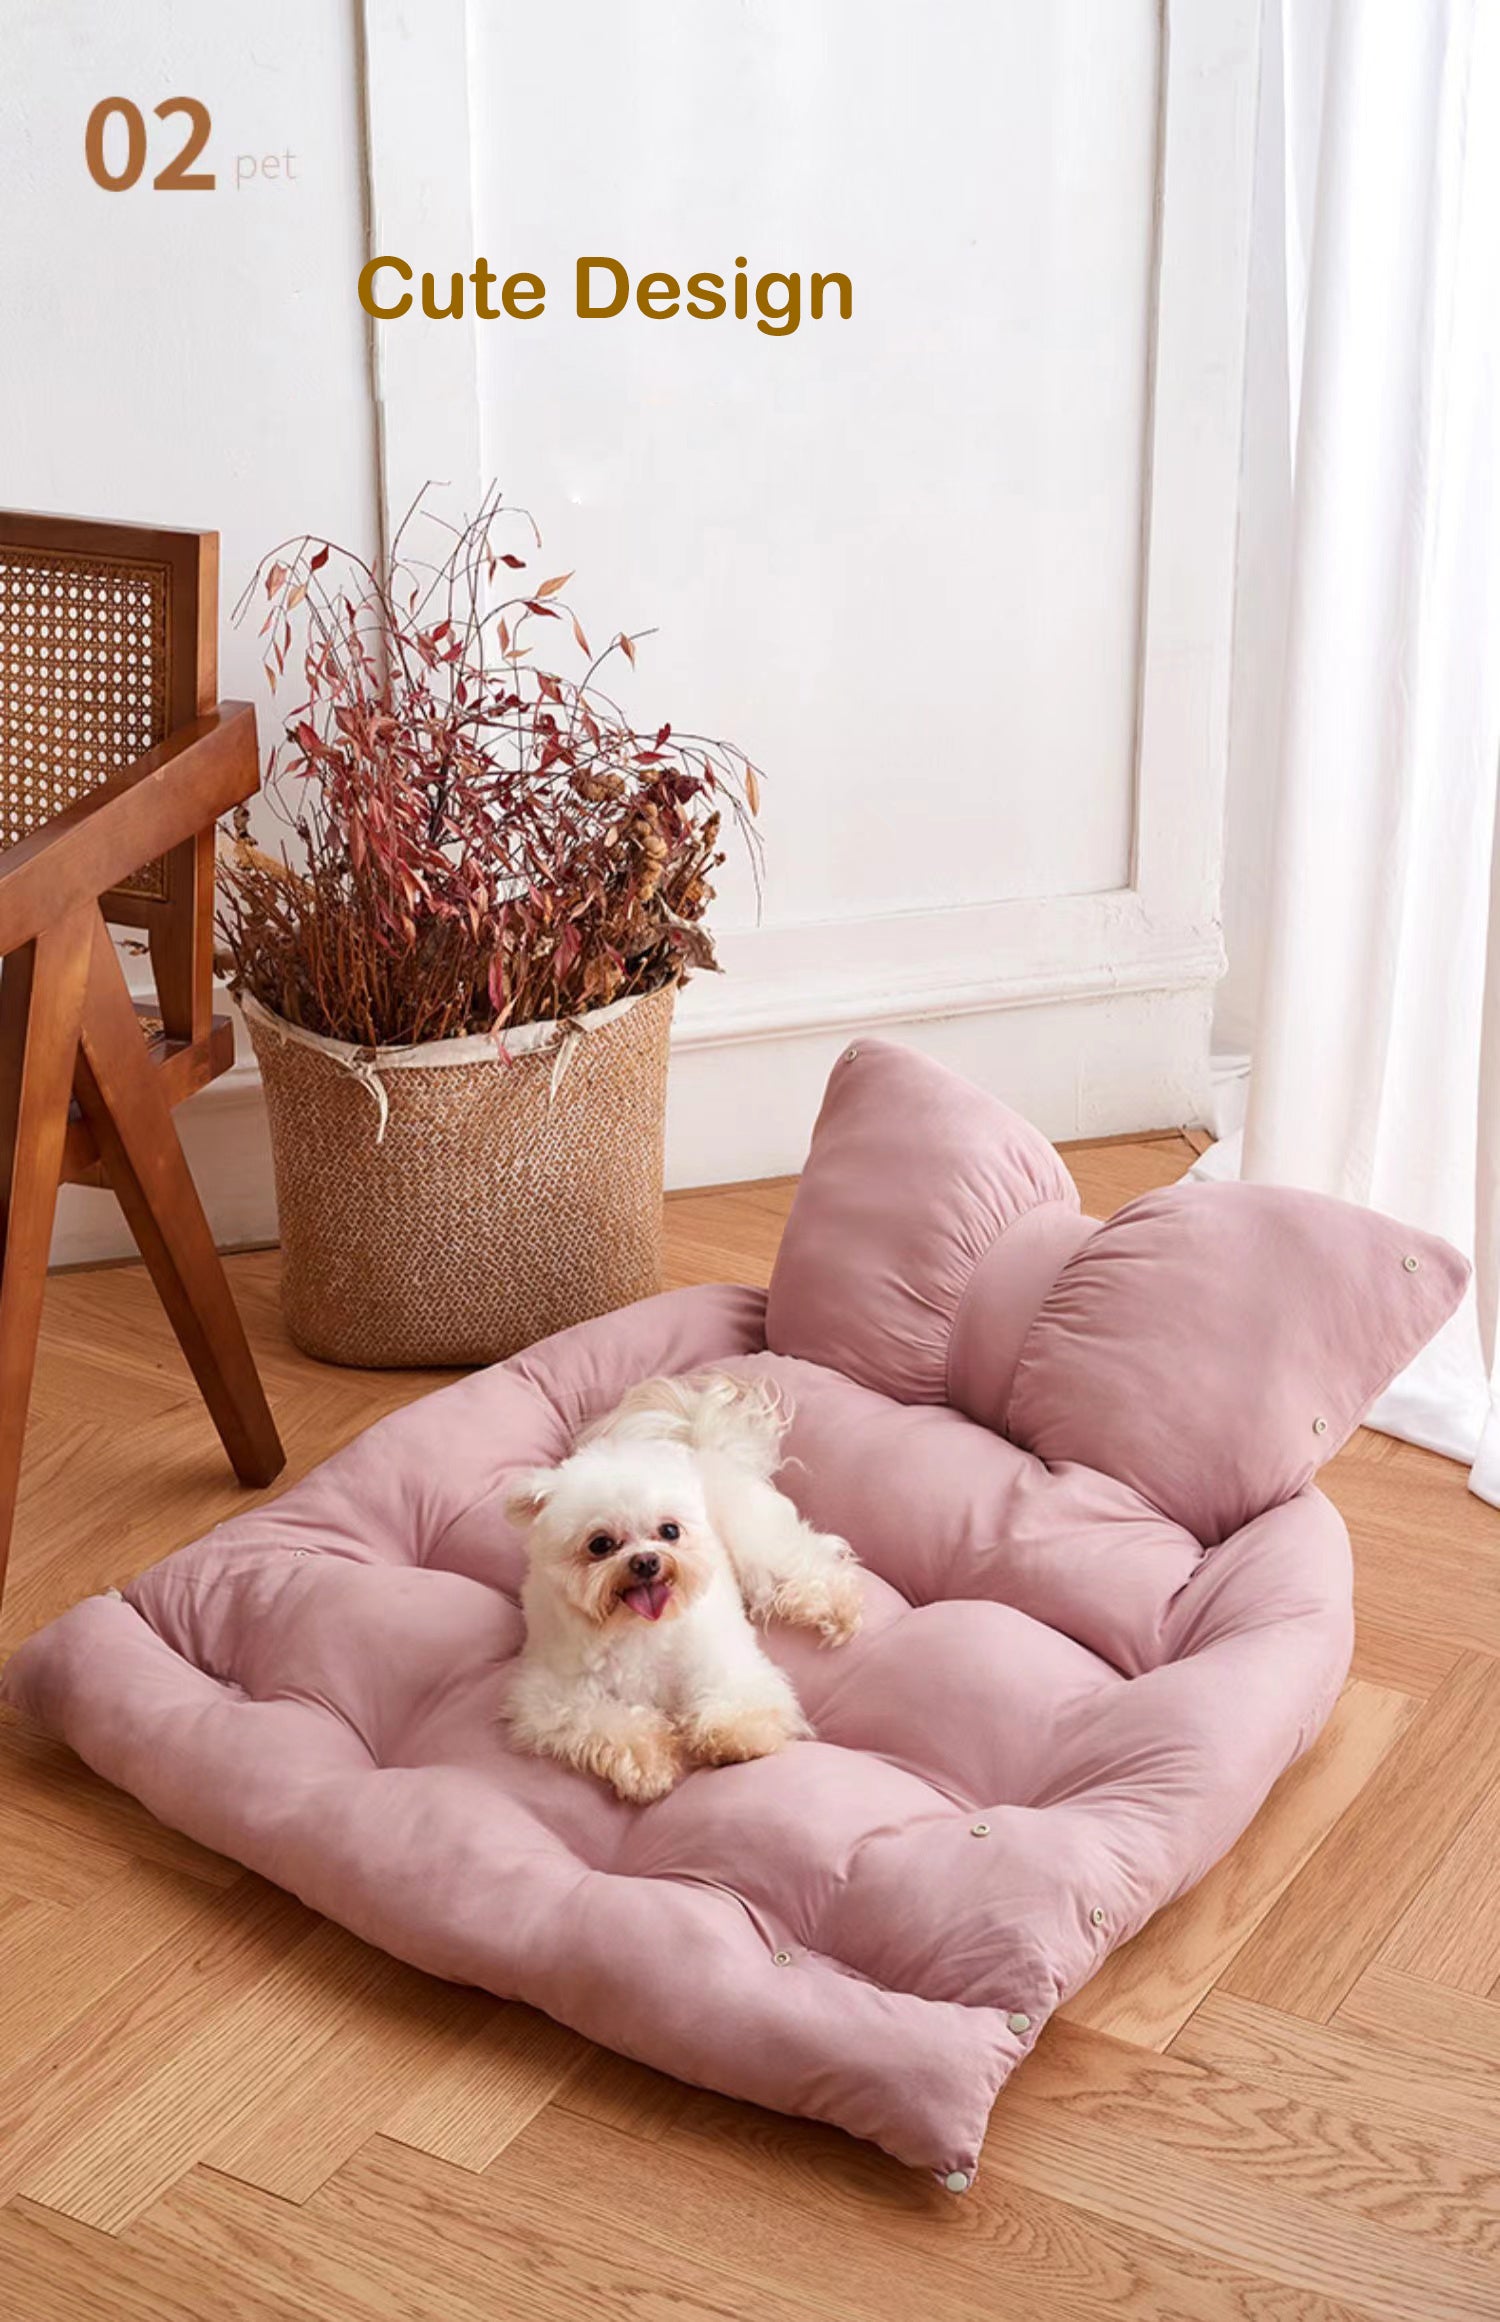 Dogs Nest Cushion Sofa - Cute Design Dog House